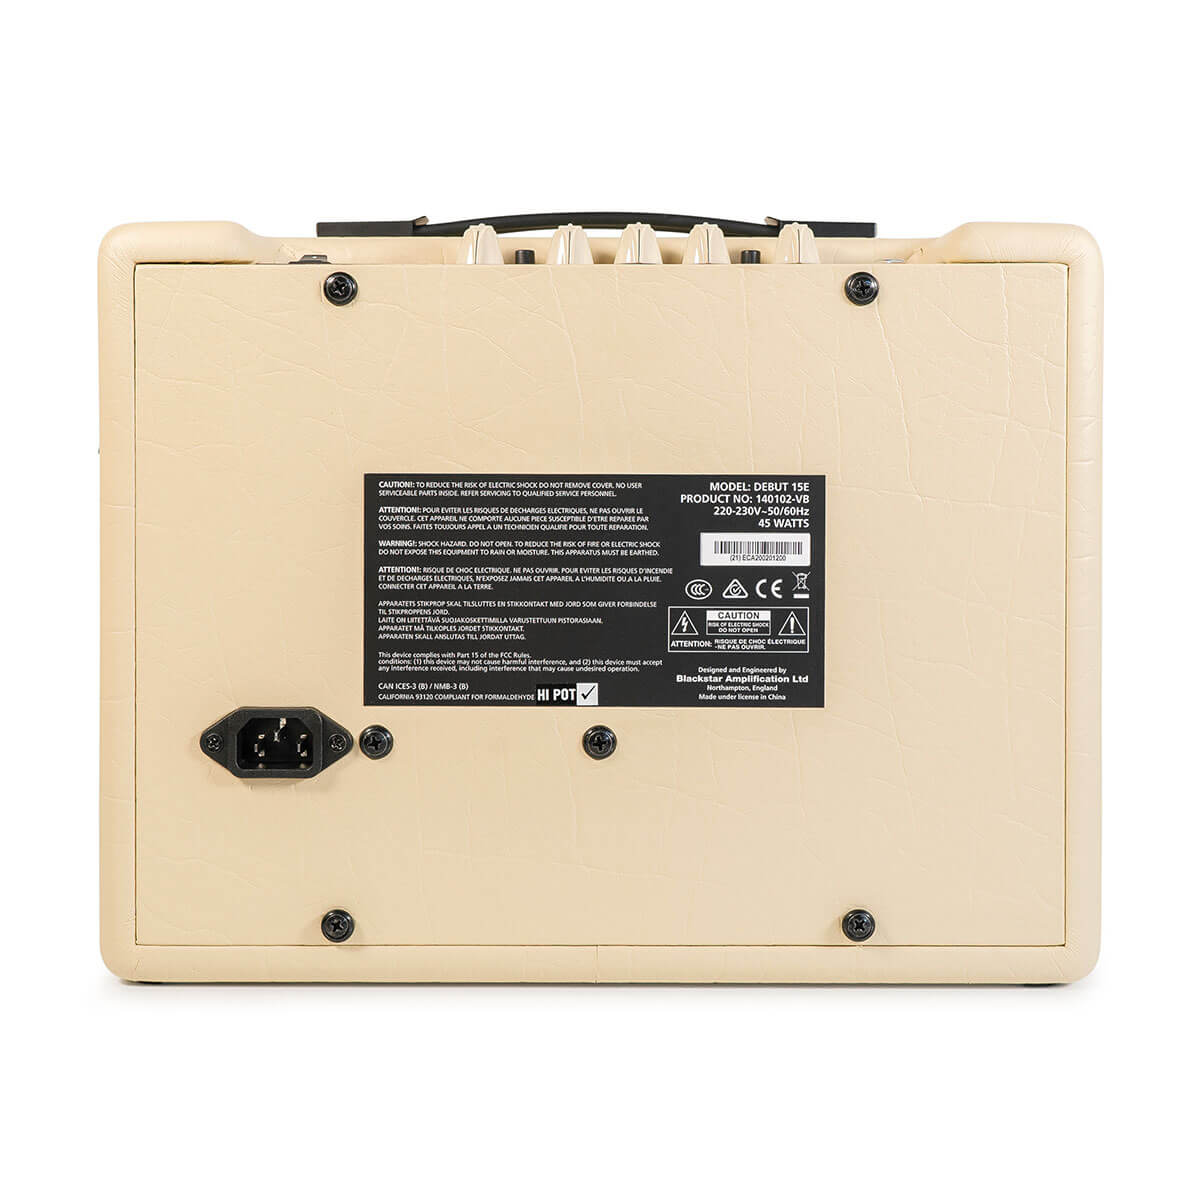 Blackstar ID:Core 10 V3 2x3-Inch 2x5-Watt Stereo Combo Amp with Effects